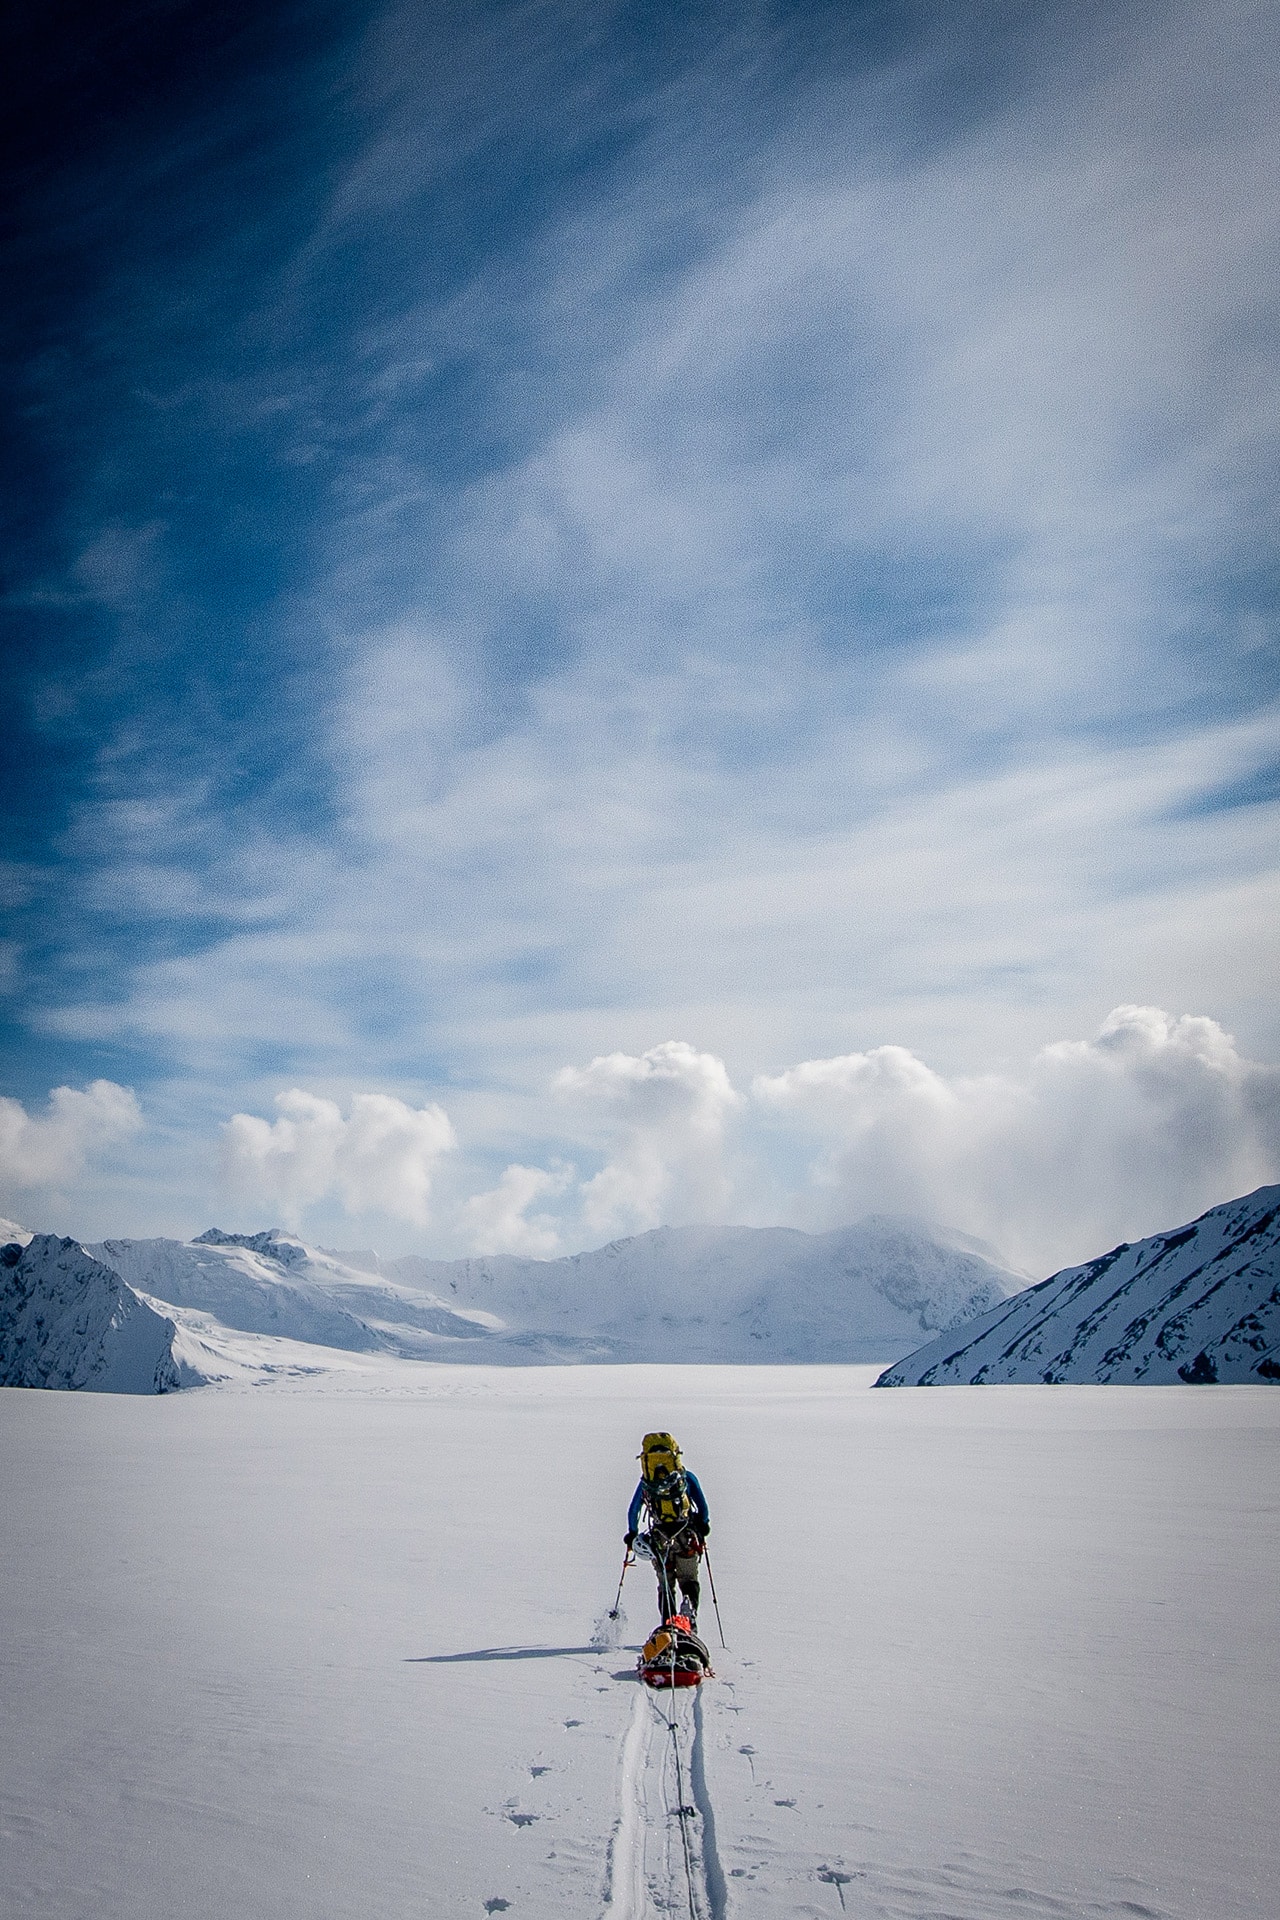 Mark Allen appraoching- he NW Fork of the Lacuna Glacier of AK